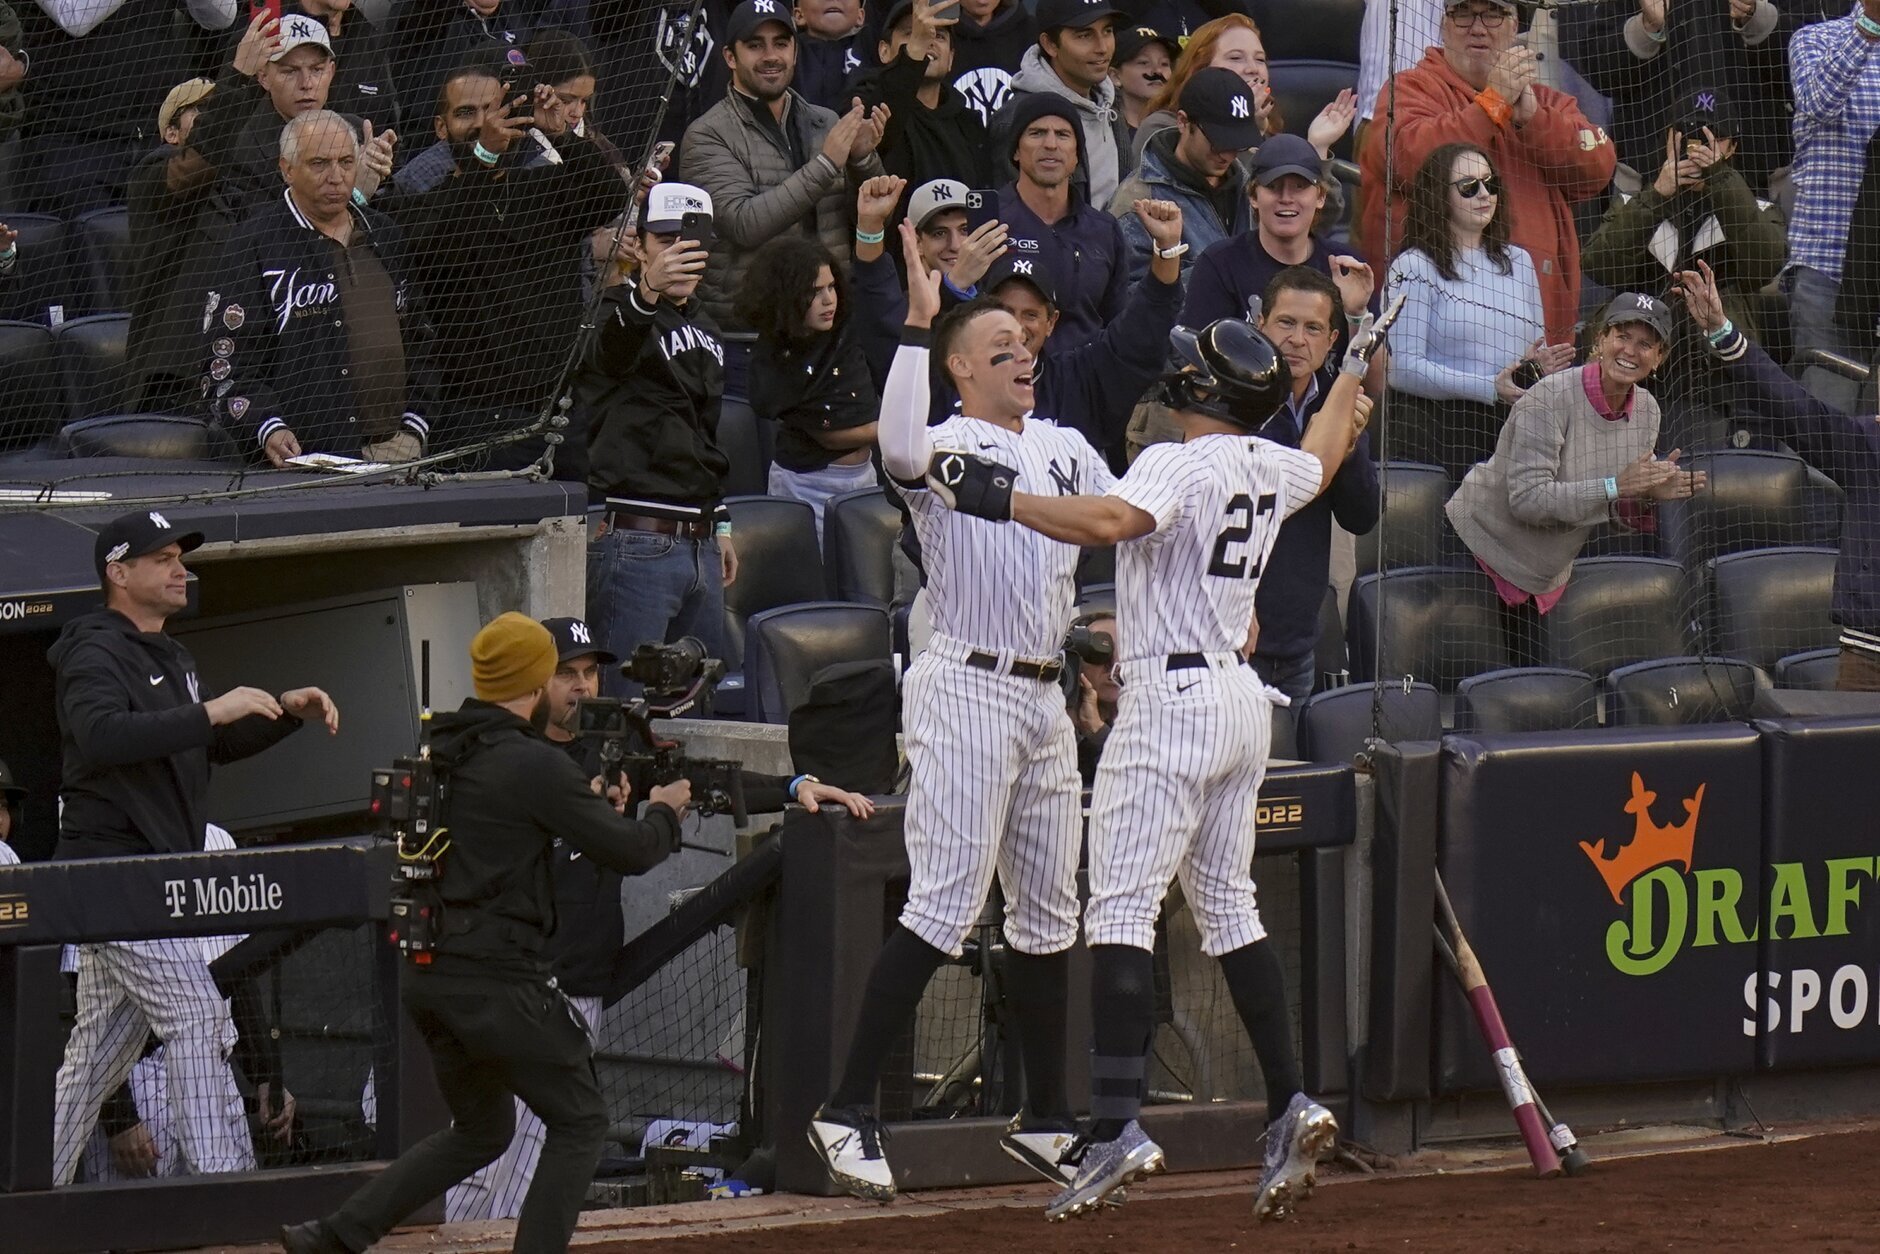 Stanton, Judge HR, Yankees beat Guards, into ALCS vs Astros